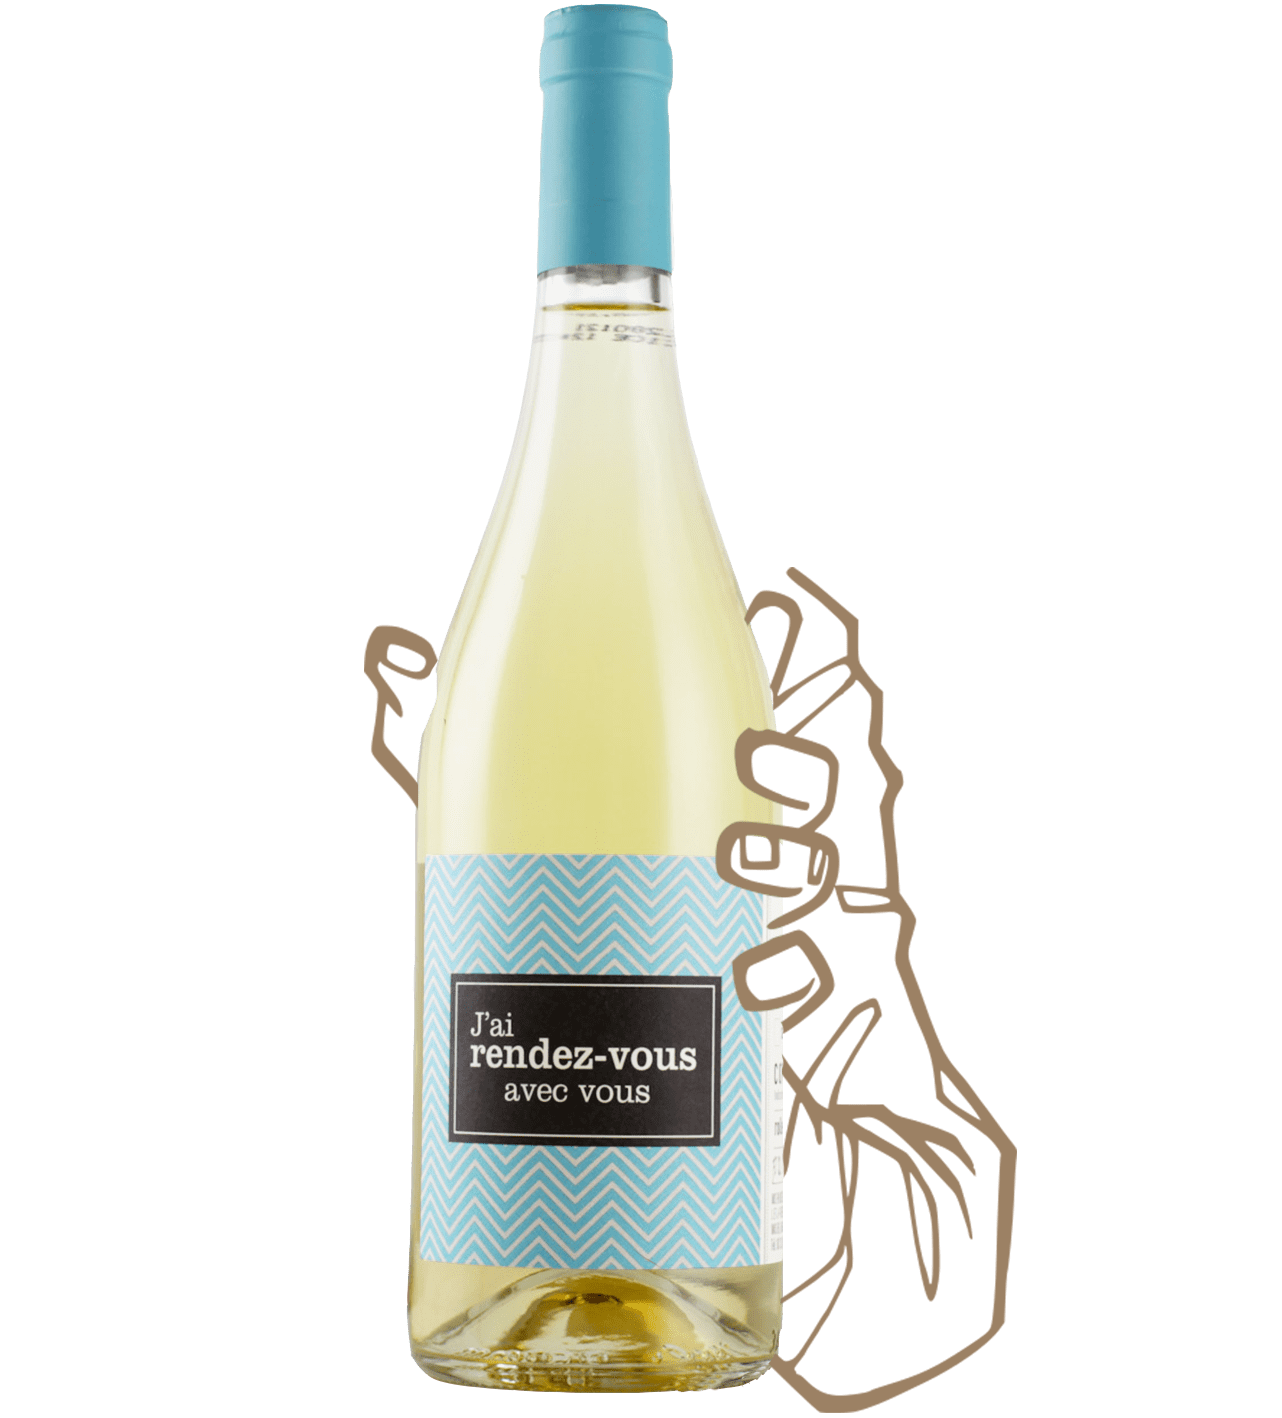 J'ai rdv avec vous white is a natural wine from roussillon by domaine rière cadenne